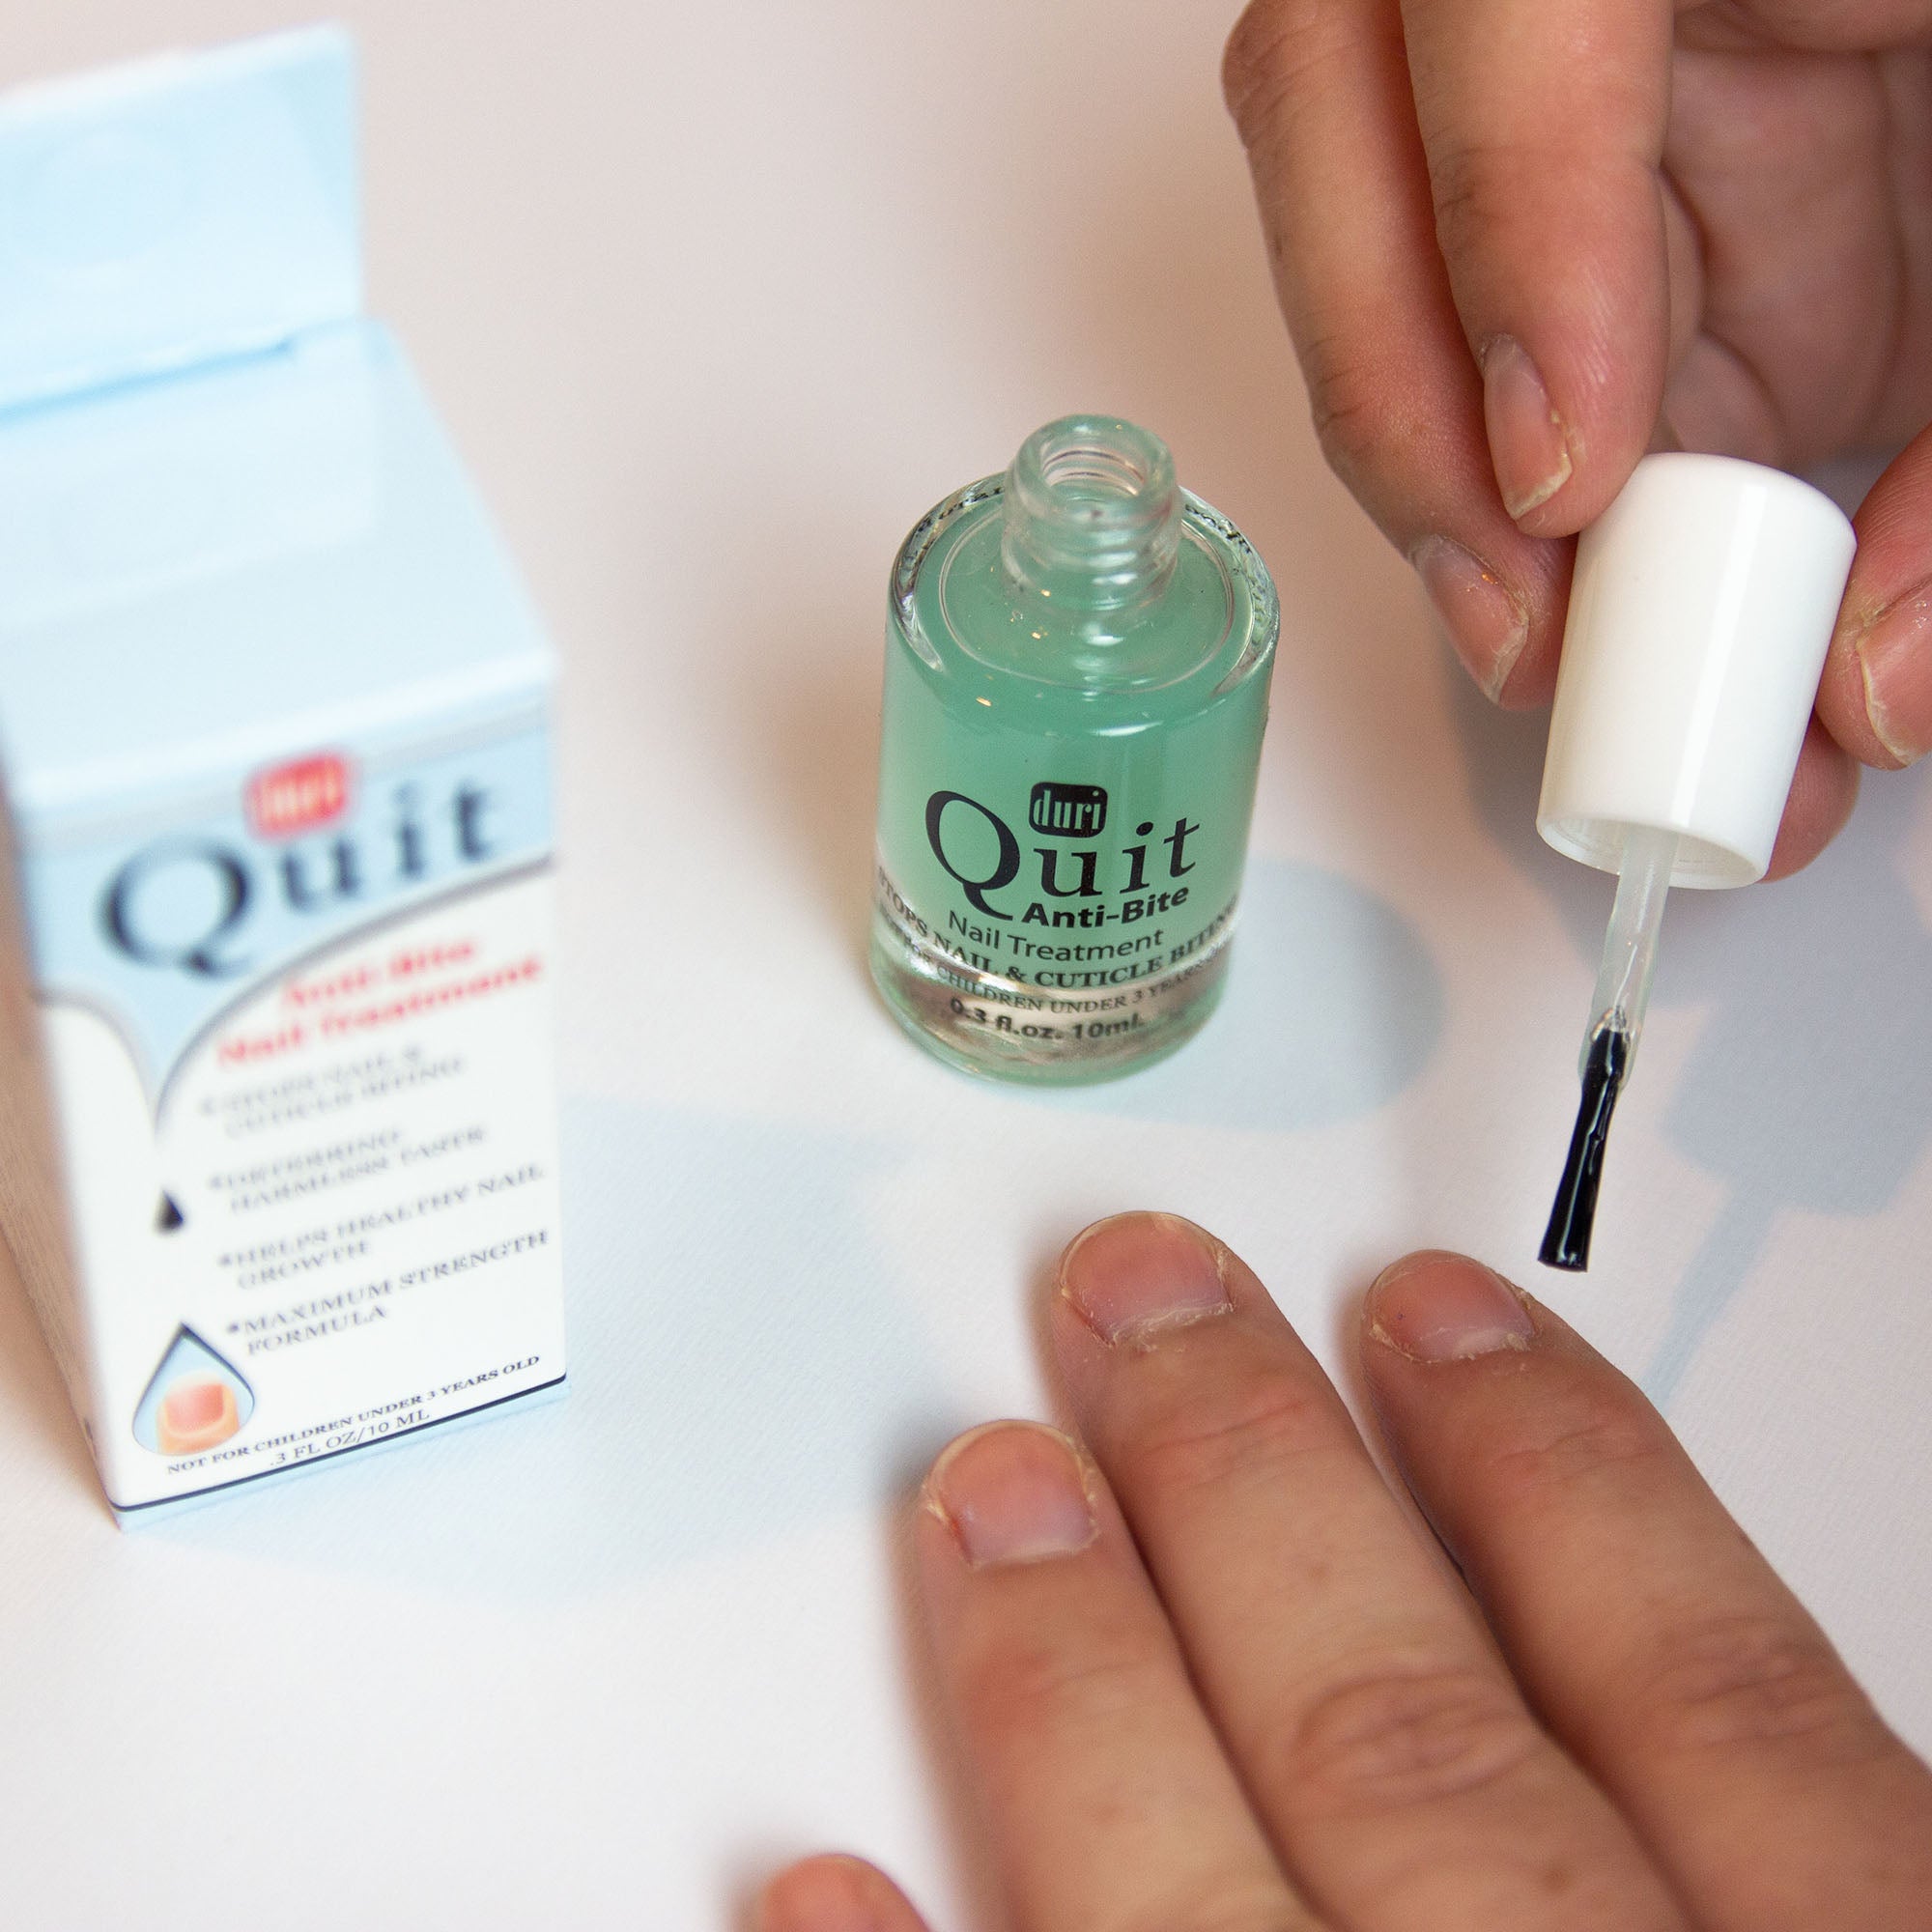 Quit Anti-Bite Nail Treatment